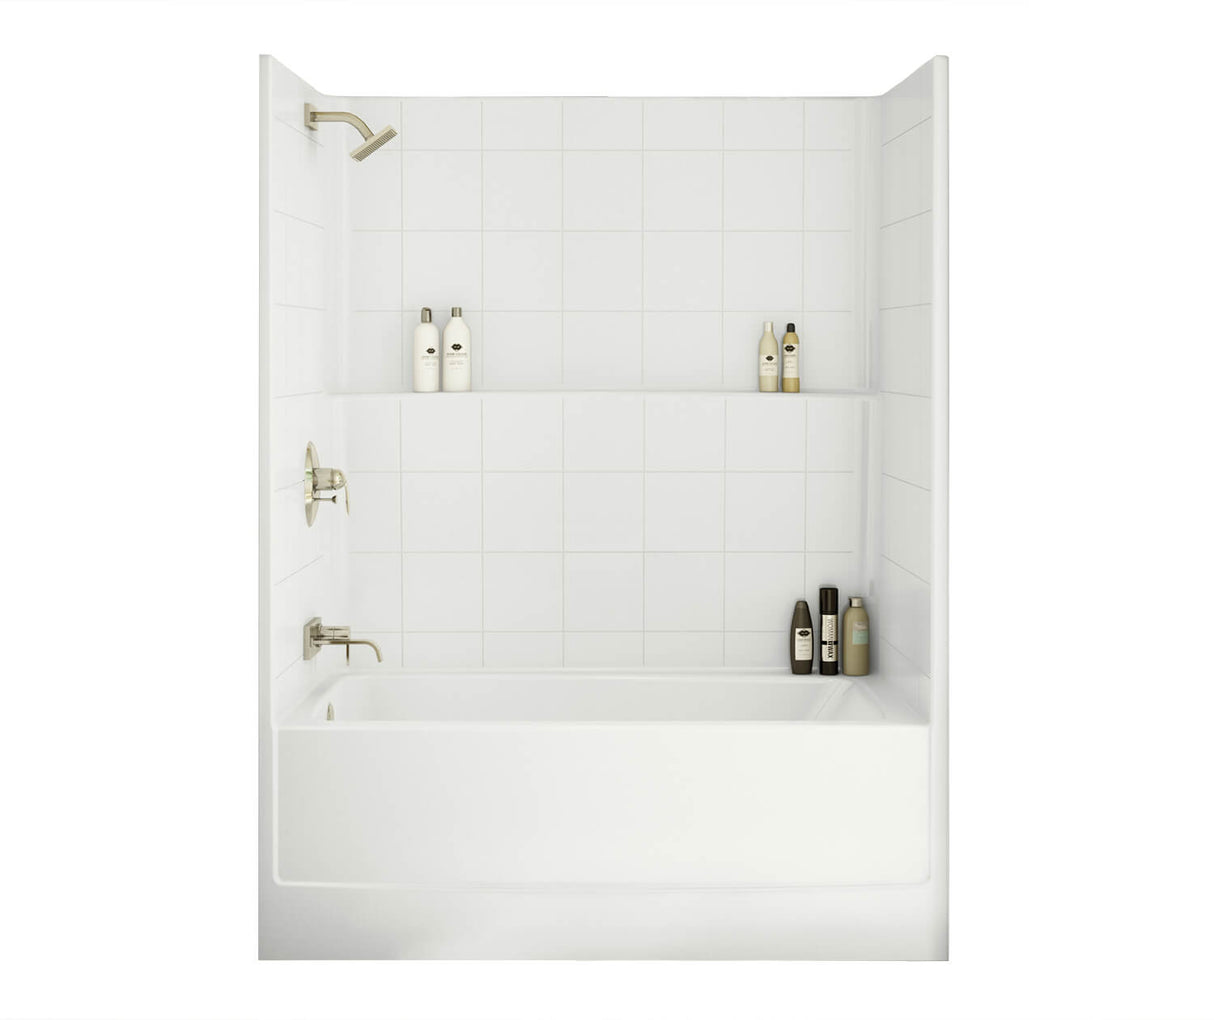 MAAX 105930-000-002-001 TSTEA Plus 60 x 32 AcrylX Alcove Left-Hand Drain One-Piece Tub Shower in White